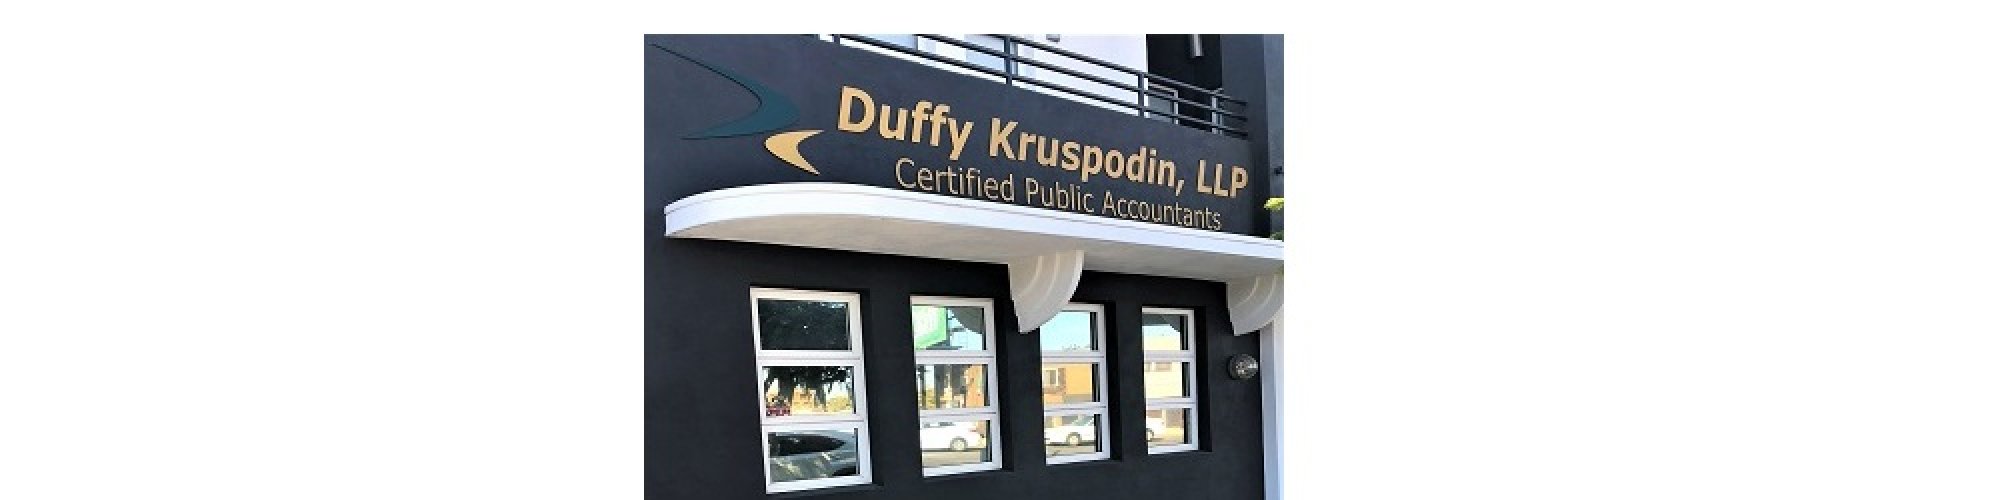 Duffy Kruspodin, LLP